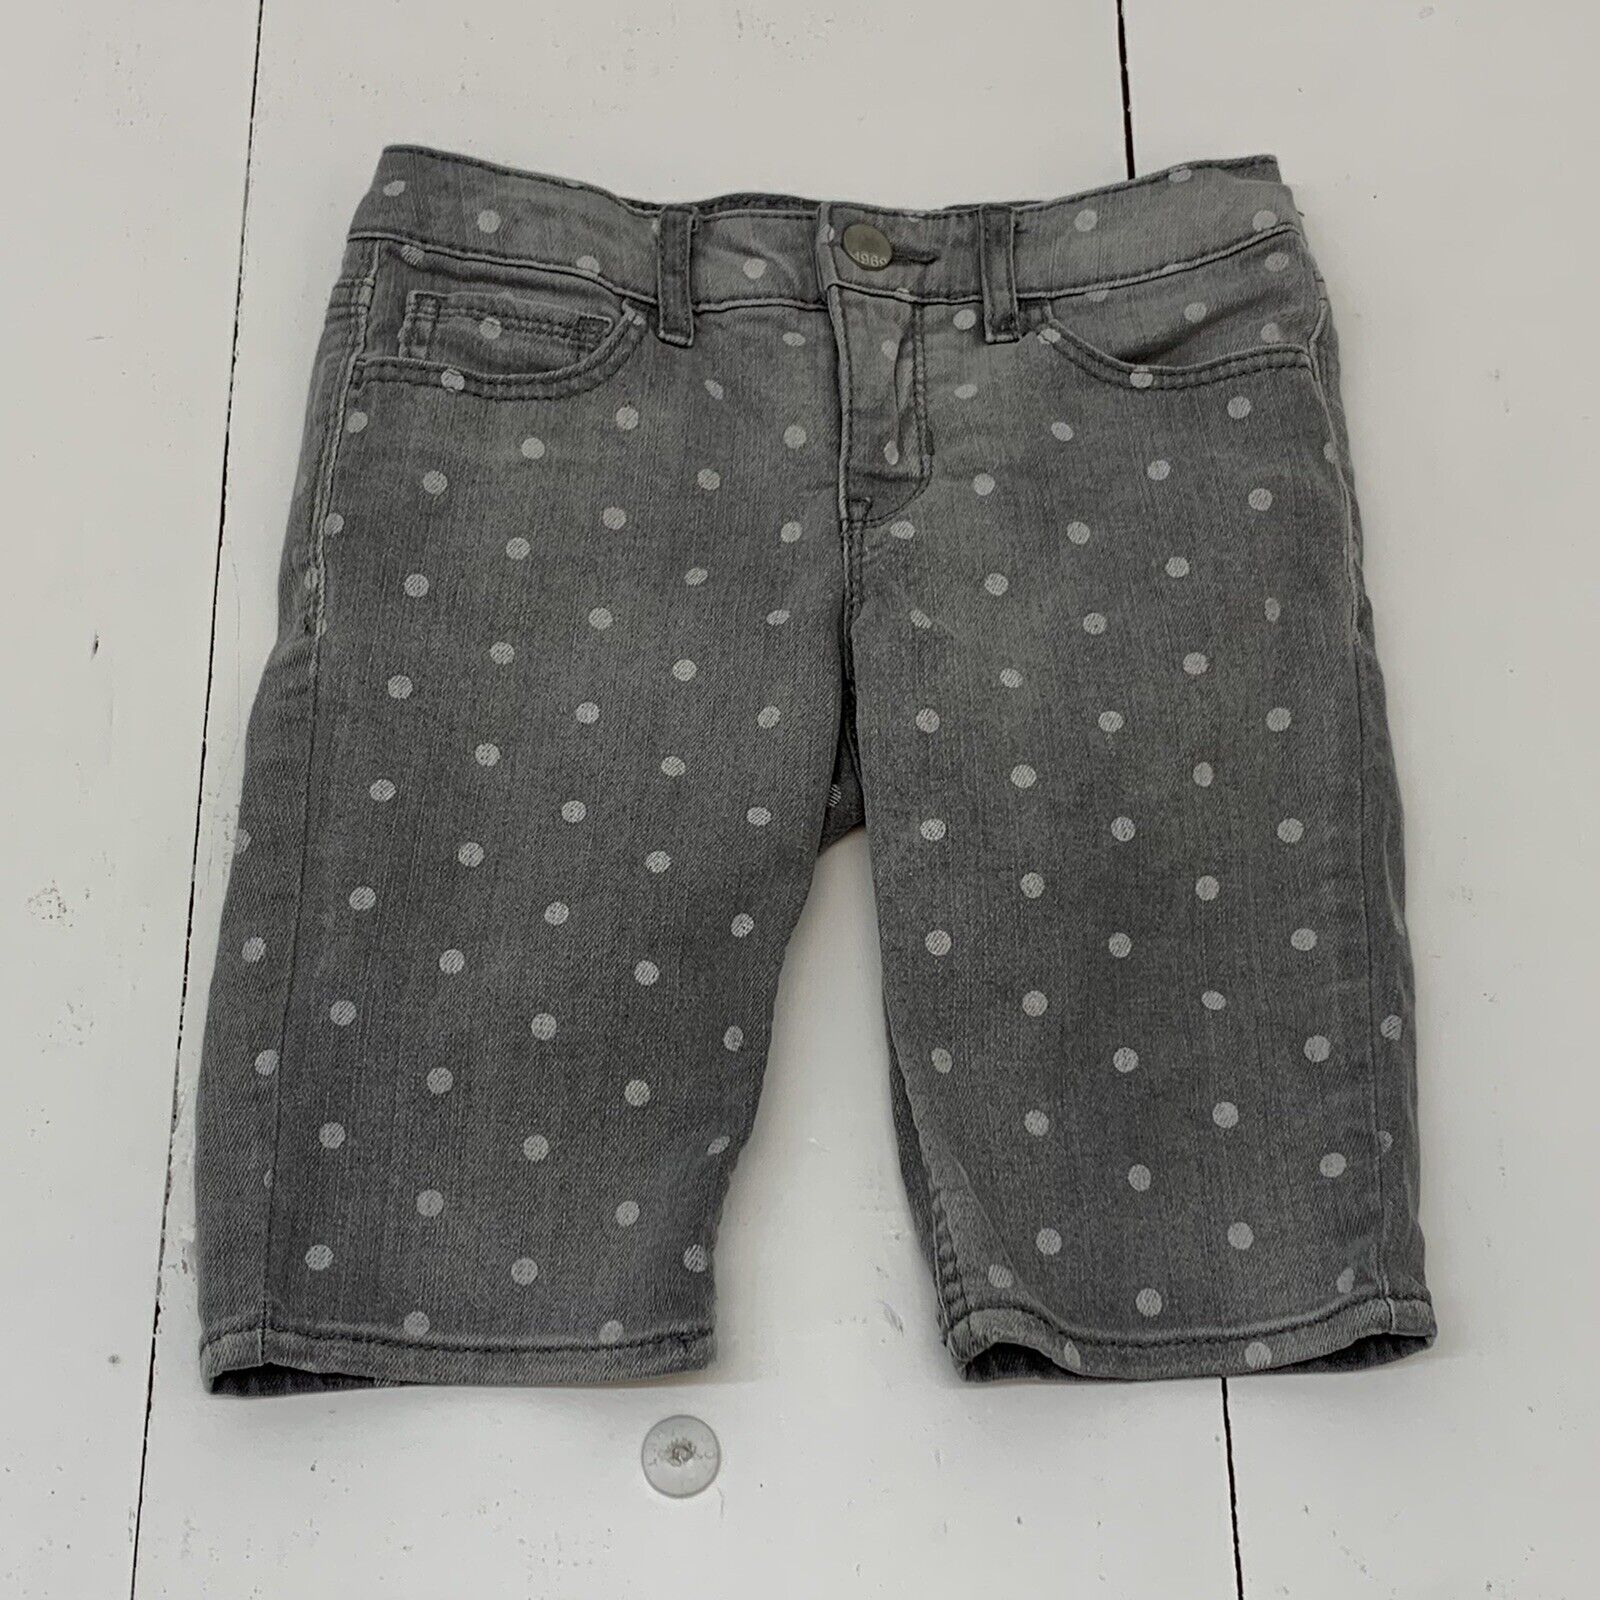 Gapkids Bermuda Gray Shorts Size 8